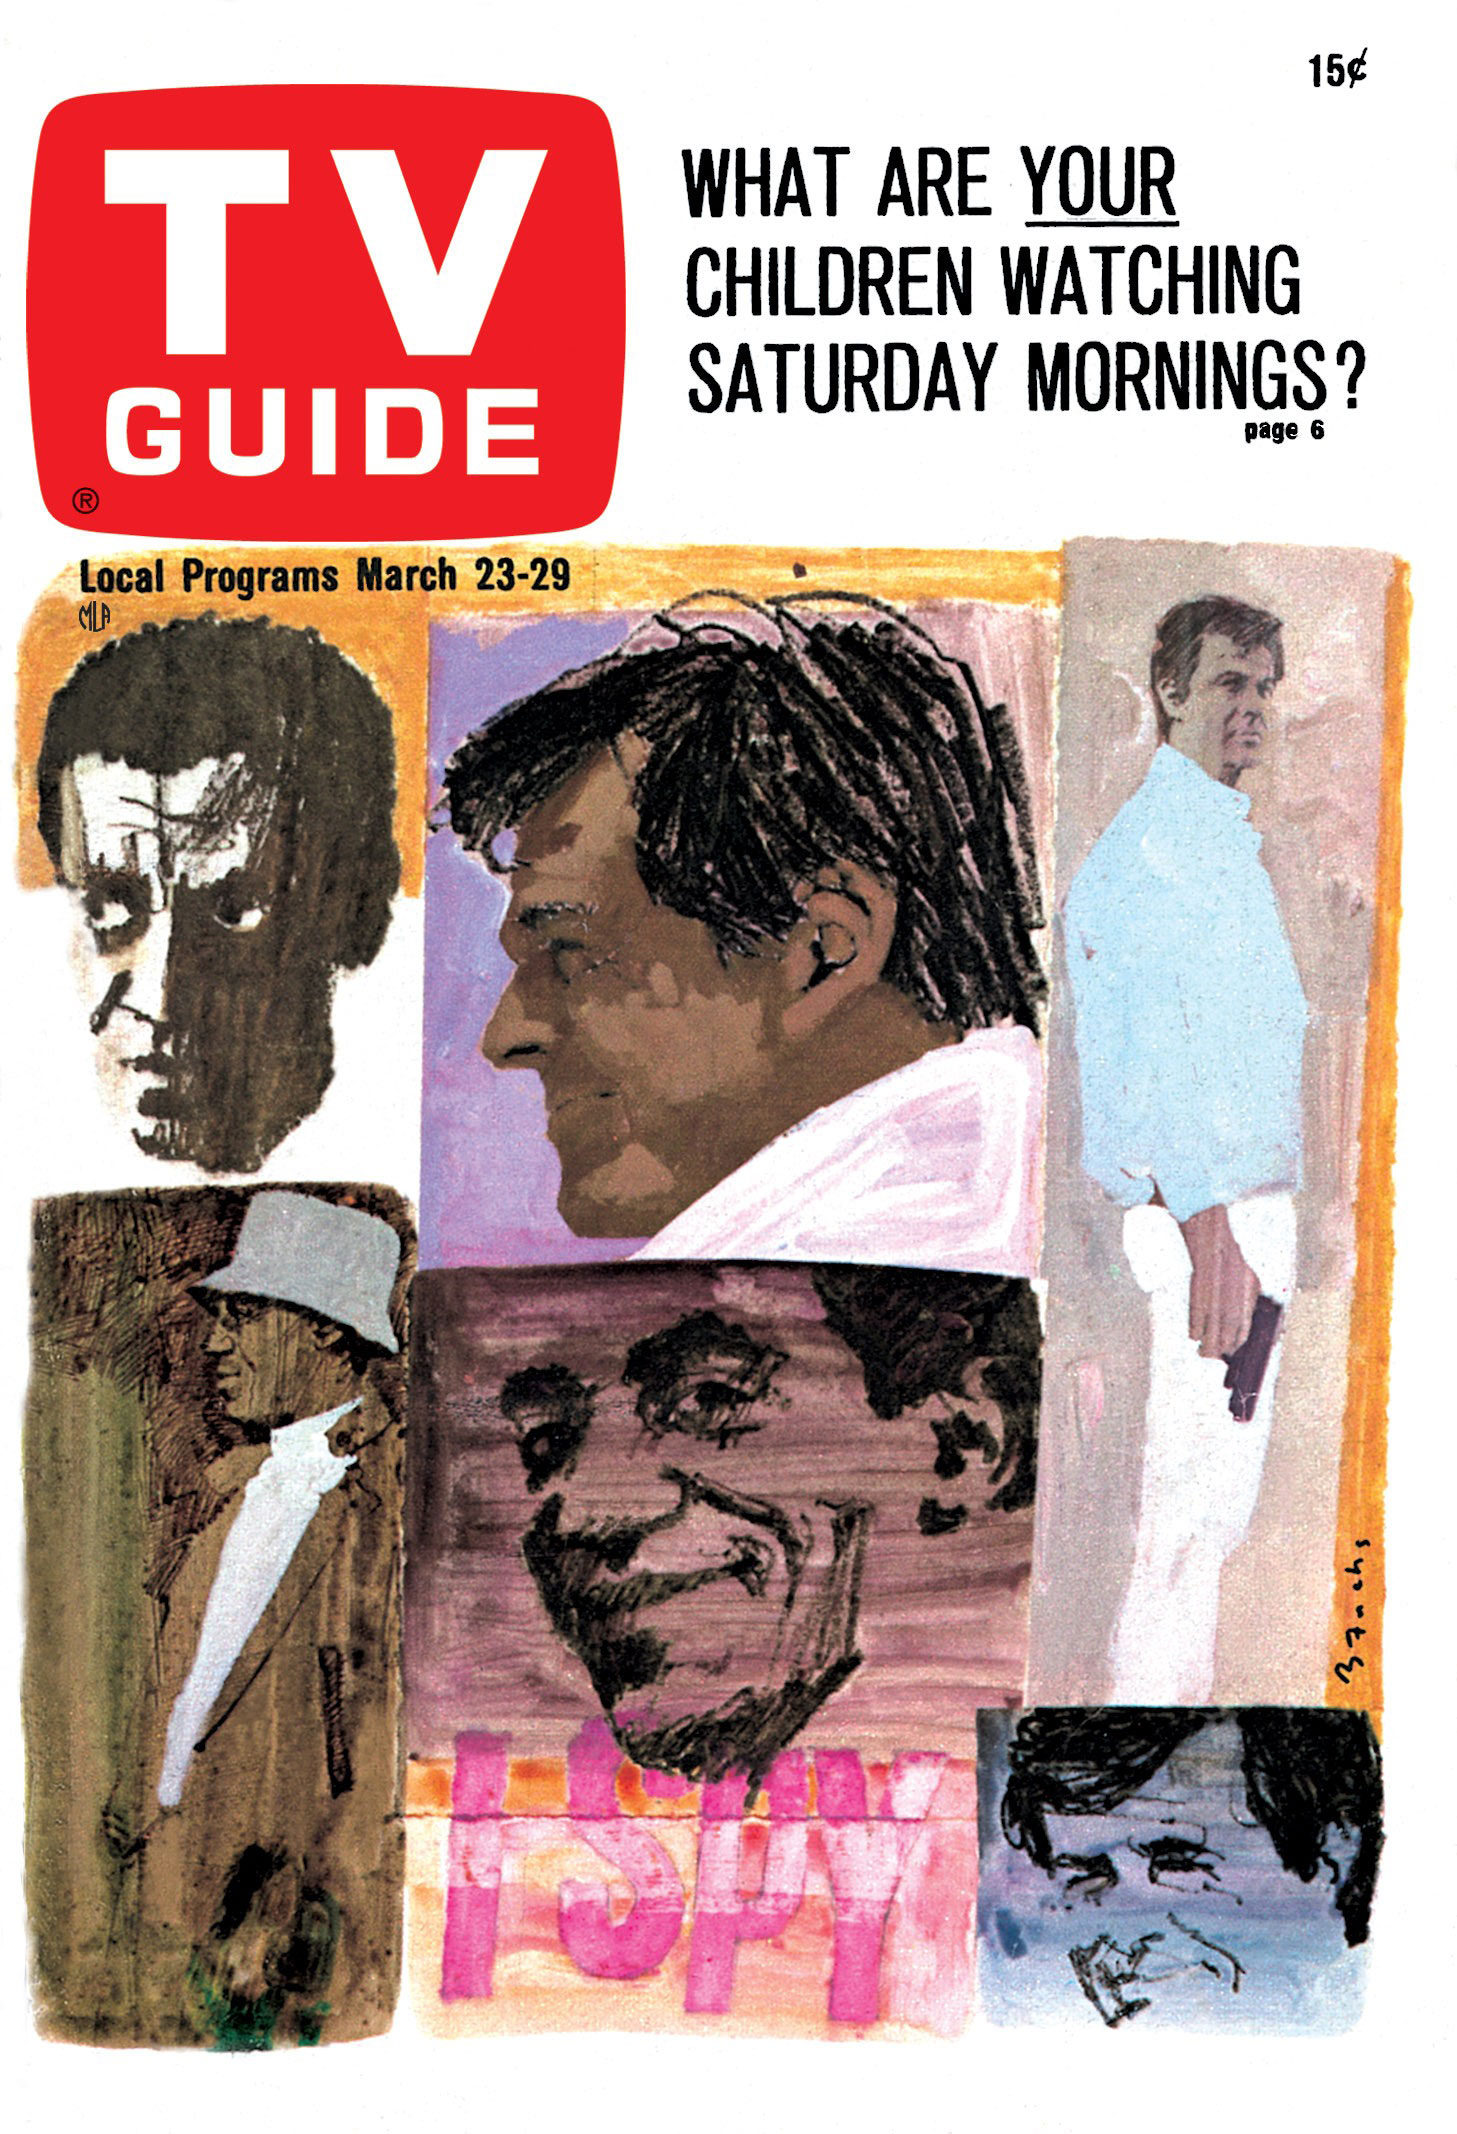 I SPY, from left: Bill Cosby, Robert Culp, TV GUIDE cover, March 23-29, 1968. Illustration by Bernard Fuchs. 